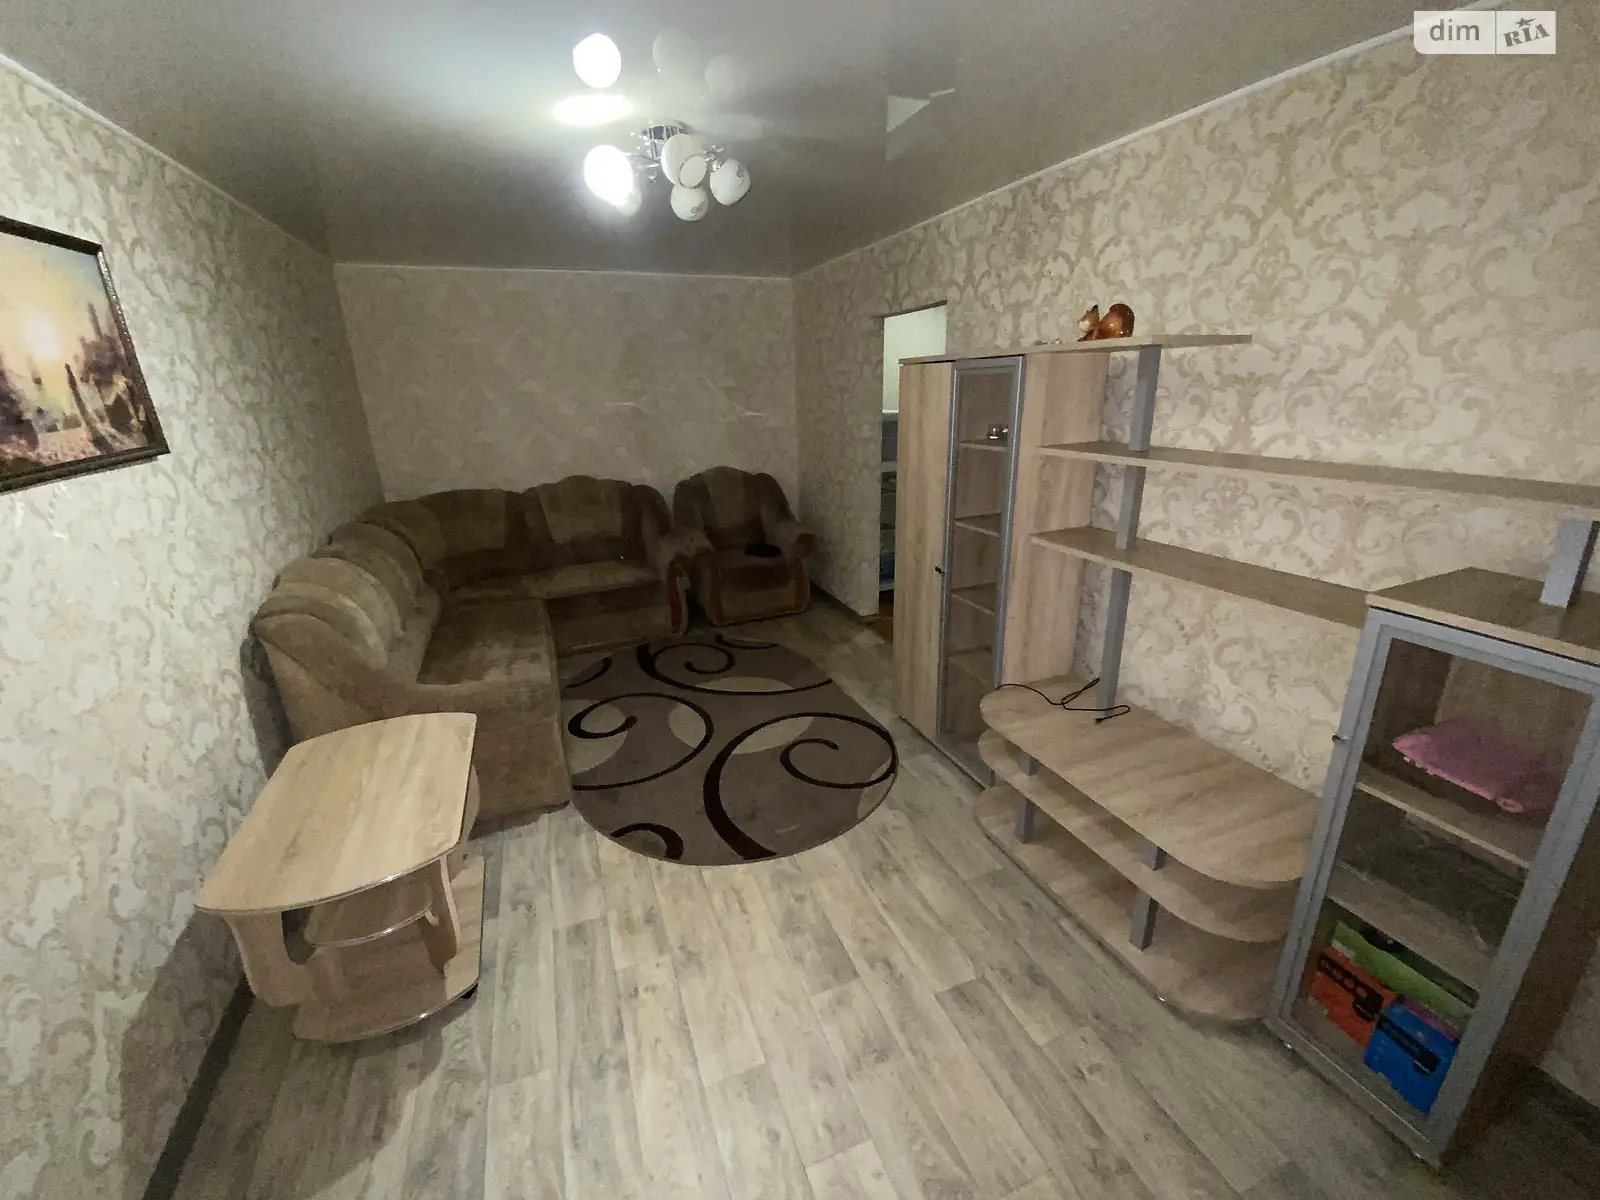 Сдается в аренду 1-комнатная квартира в Славянске, цена: 1300 грн